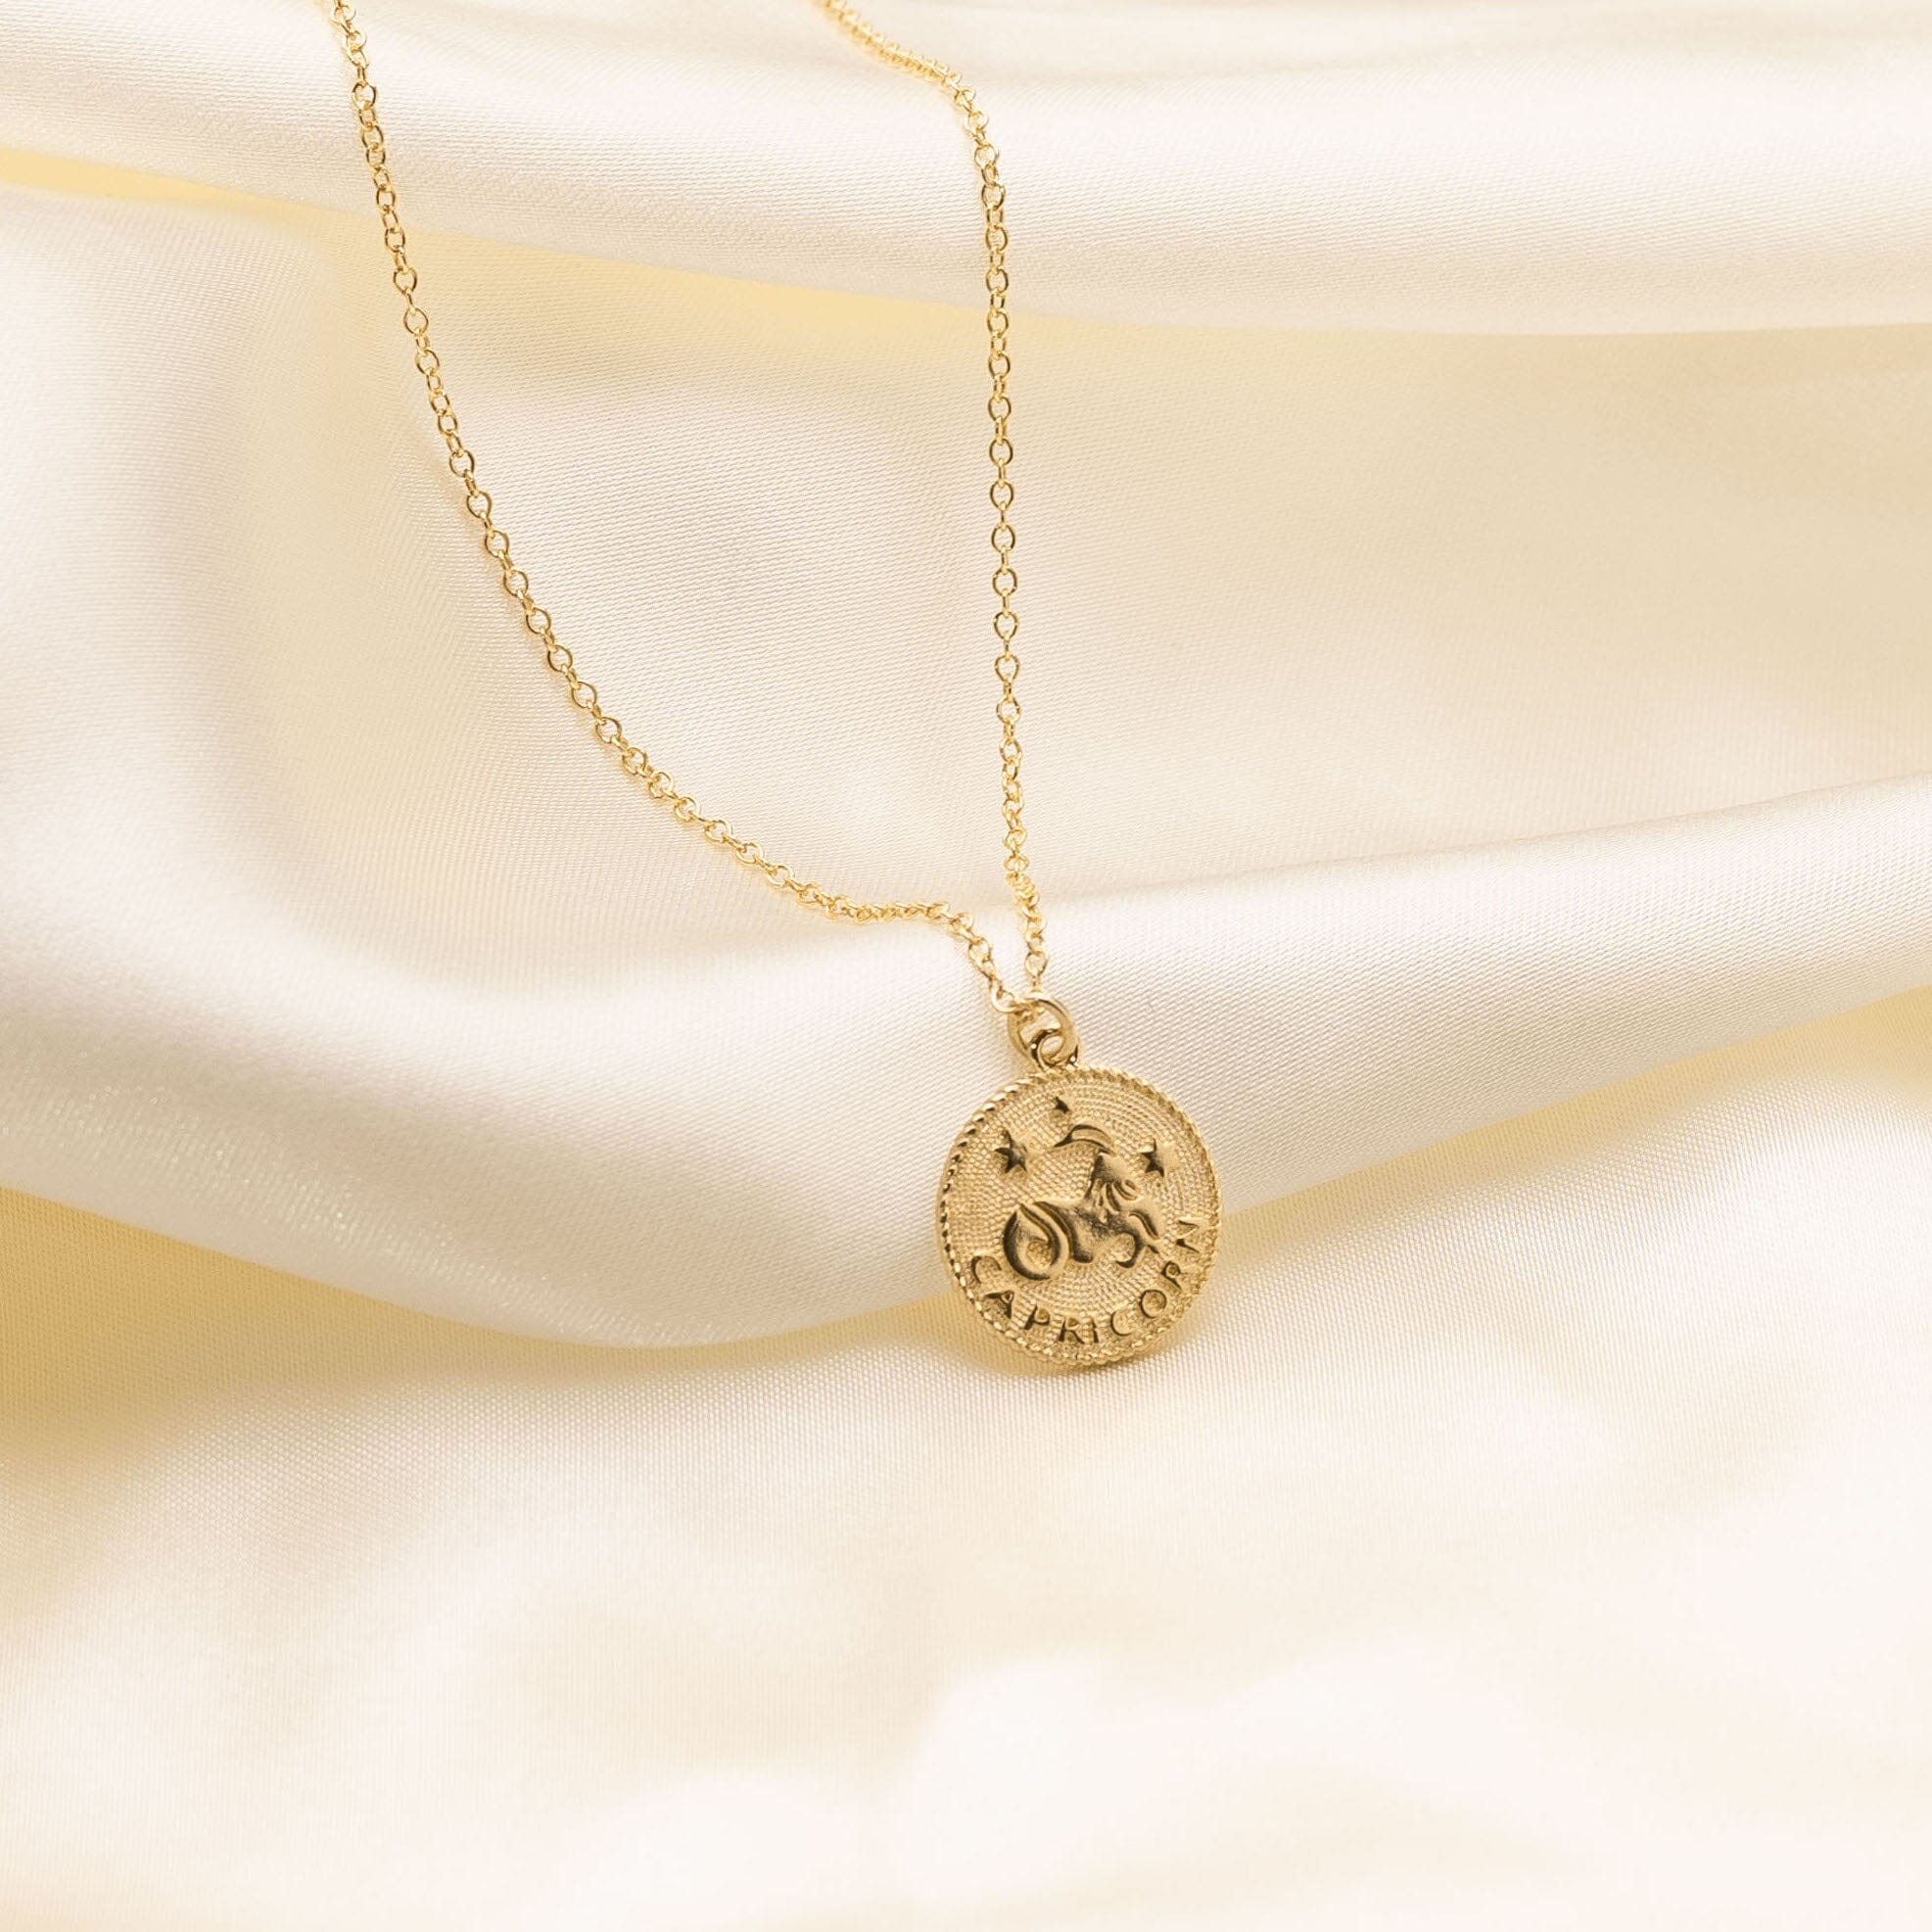 Capricorn Zodiac Necklace, Capricorn season goes from Dec 22-Jan 19, each piece is made in America by Katie Dean Jewelry.